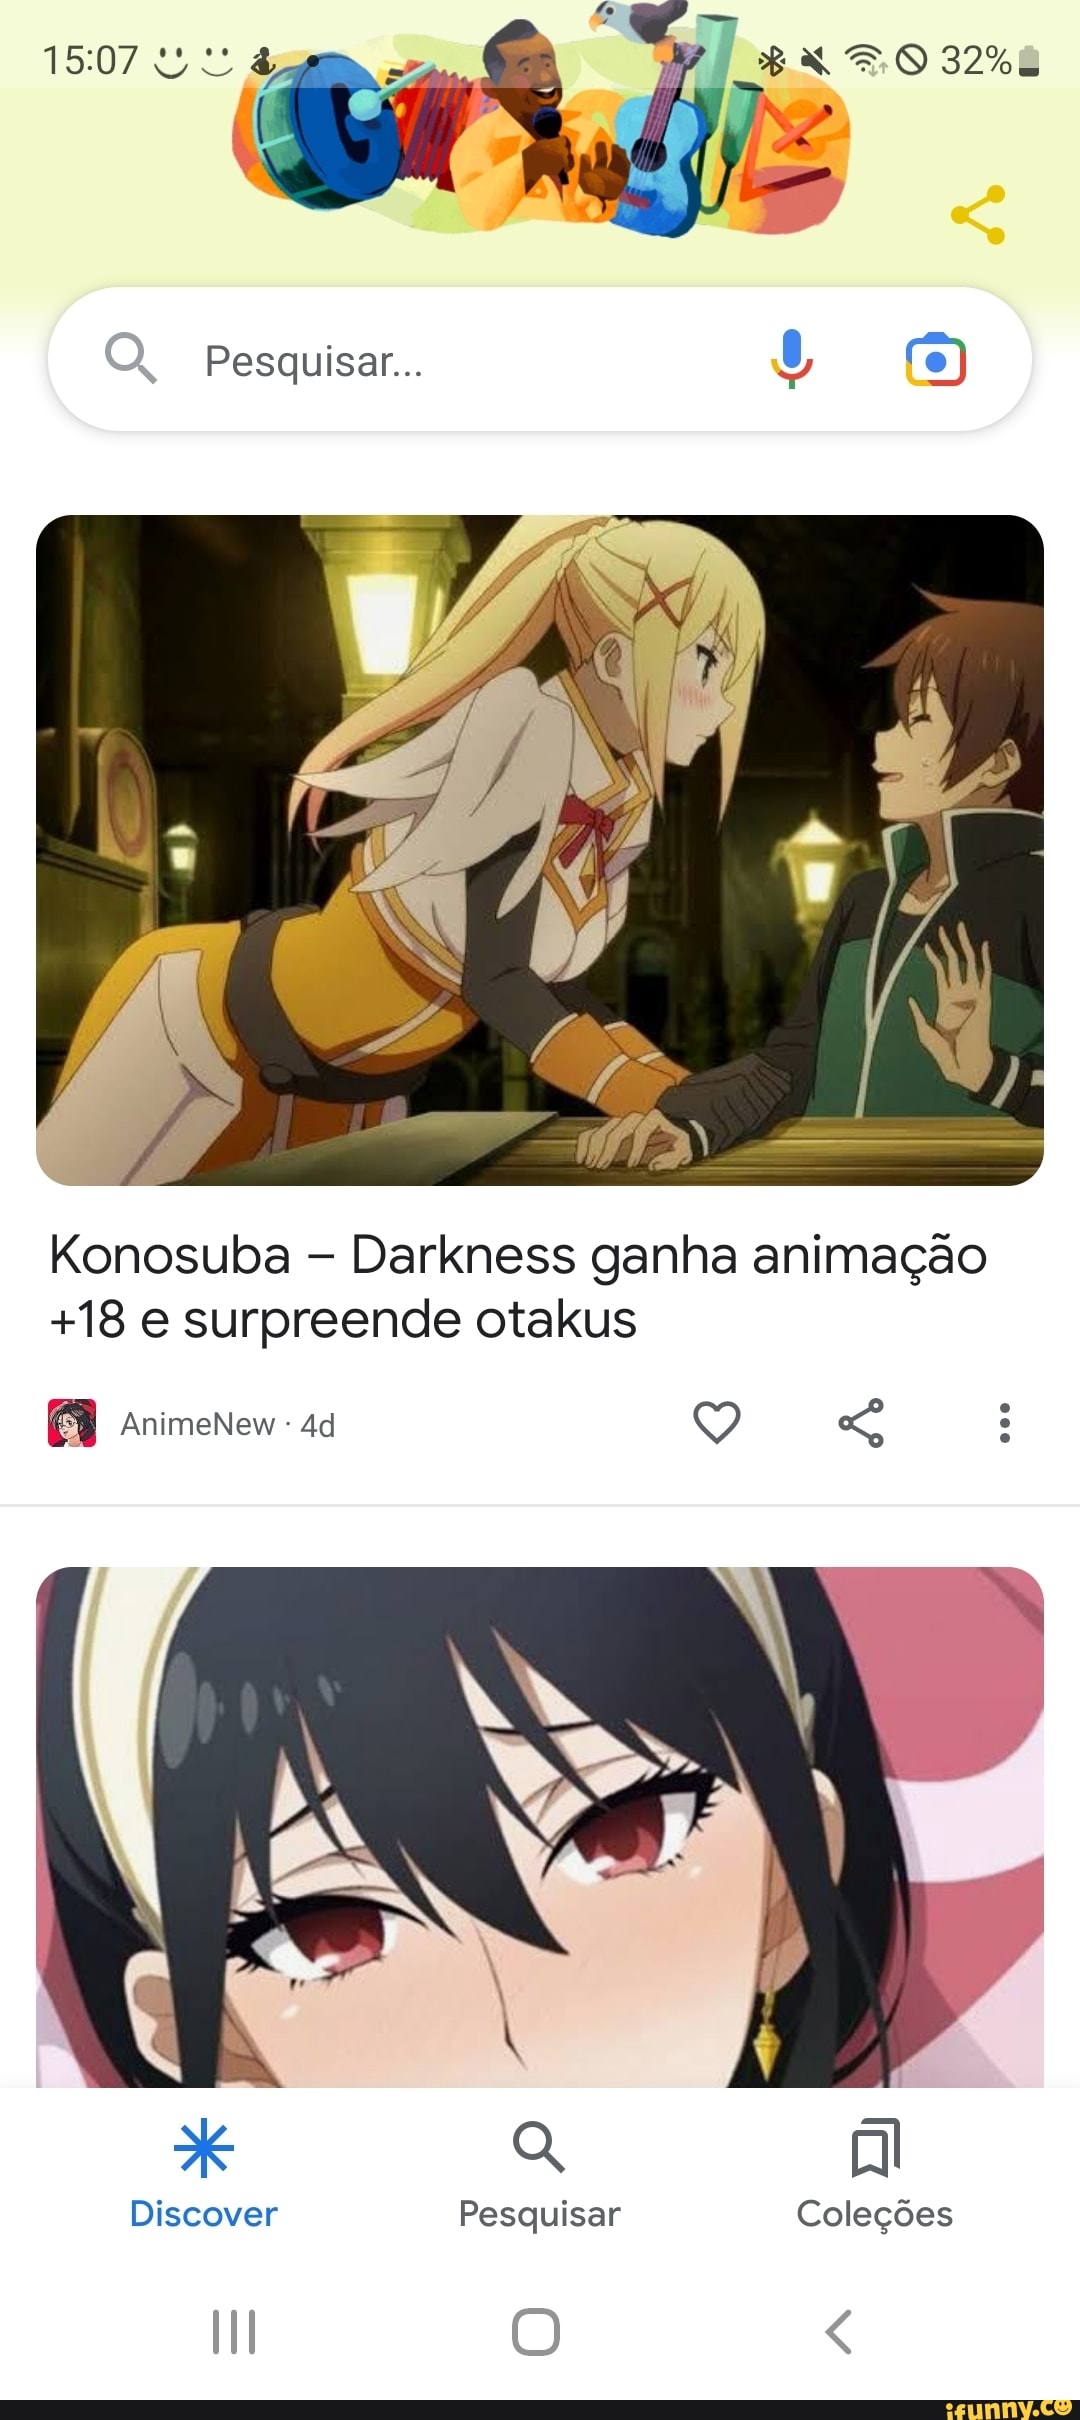 Konosuba Darkness ganha animação +18 e surpreende otakus popular personagem  Darkness do anime Konosuba ganhou